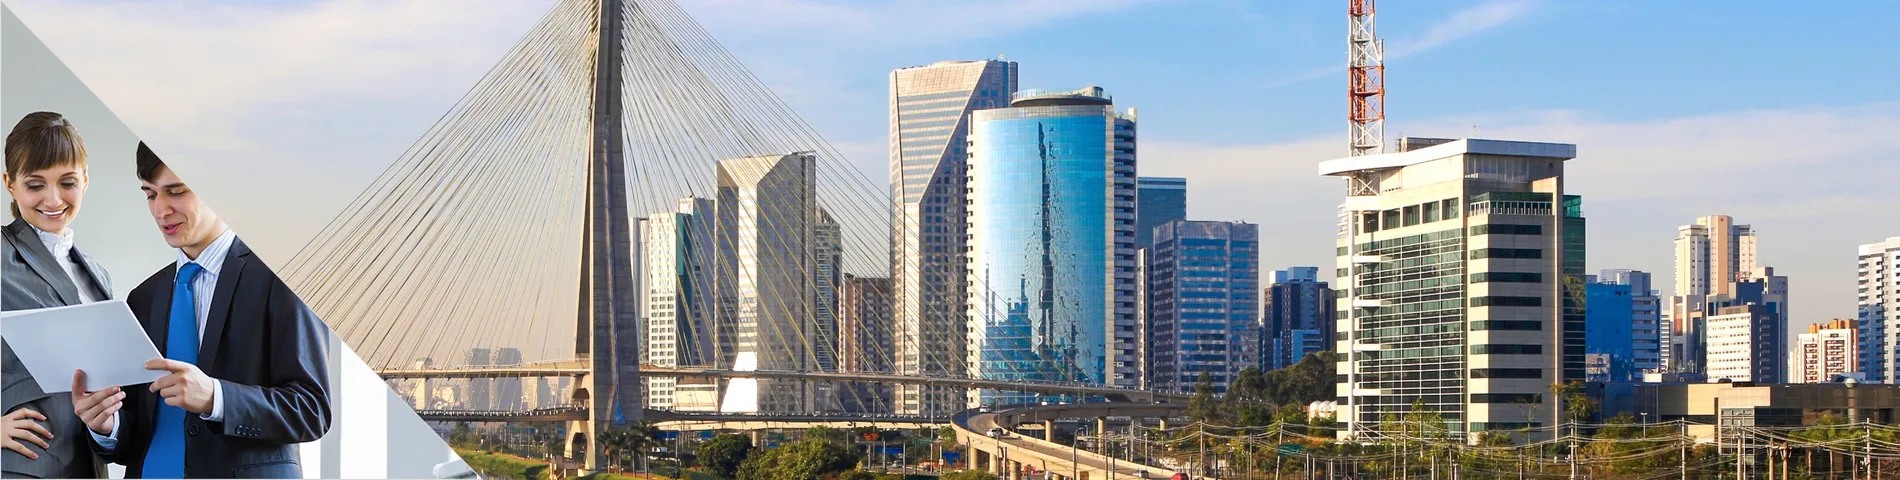 Sao Paulo - Negocis Individuals